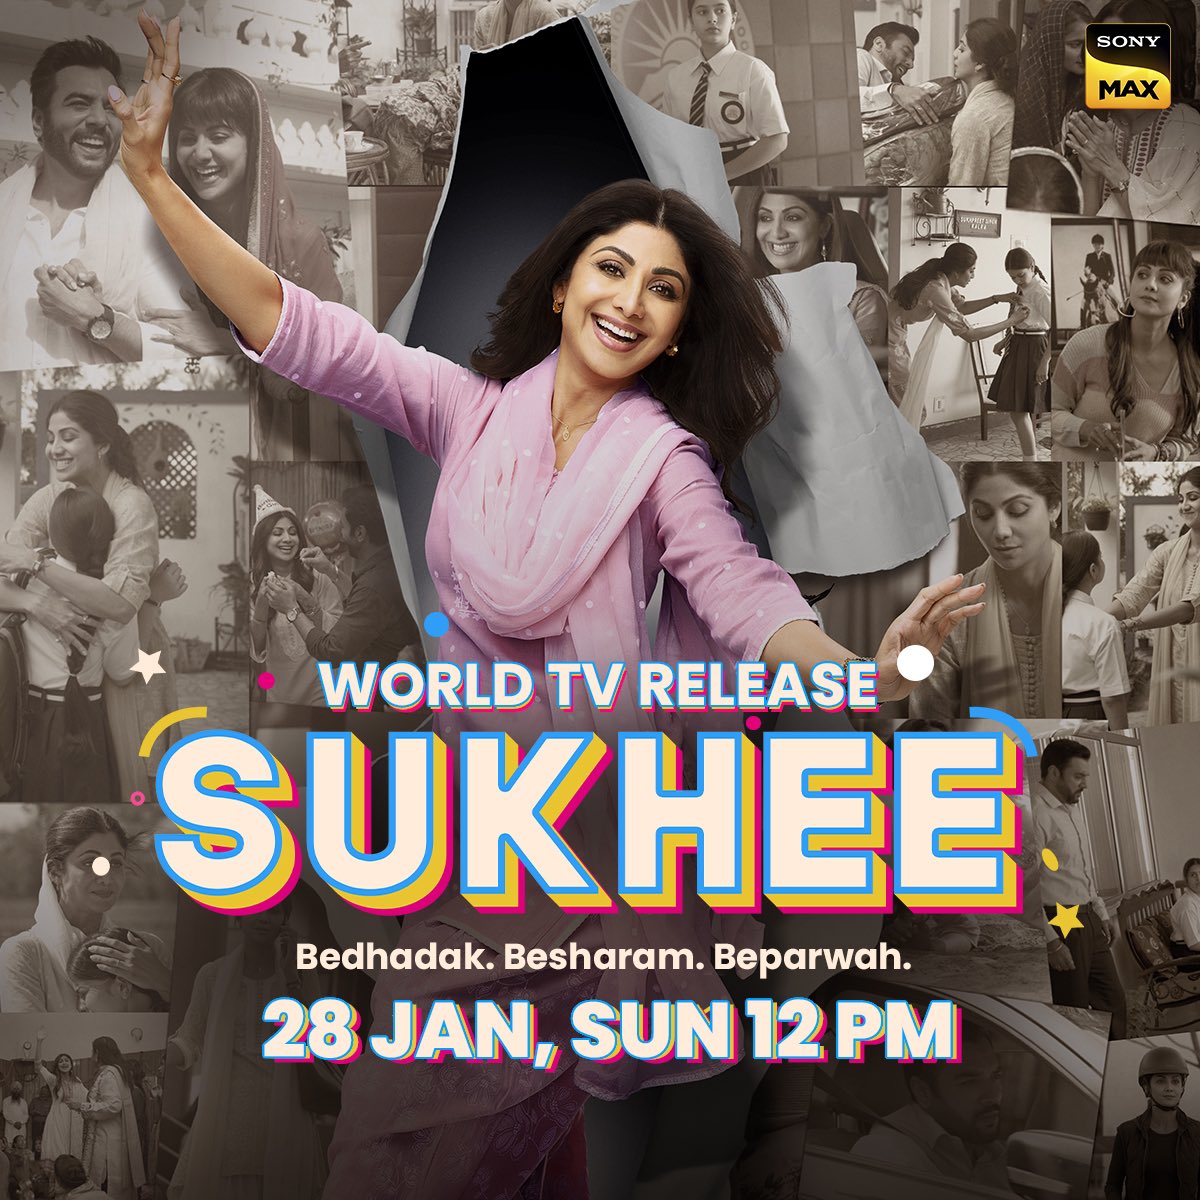 Bedhadak. Besharam. Beparwah. 

Dekhiye #WorldTVRelease of ‘Sukhee’, 28th January, Sunday 12 PM, only on #SonyMAX

#Sukhee #SukheeonSonyMAX #Movie Premiere #BollywoodPremiere #Bollywood #DeewanaBanaDe